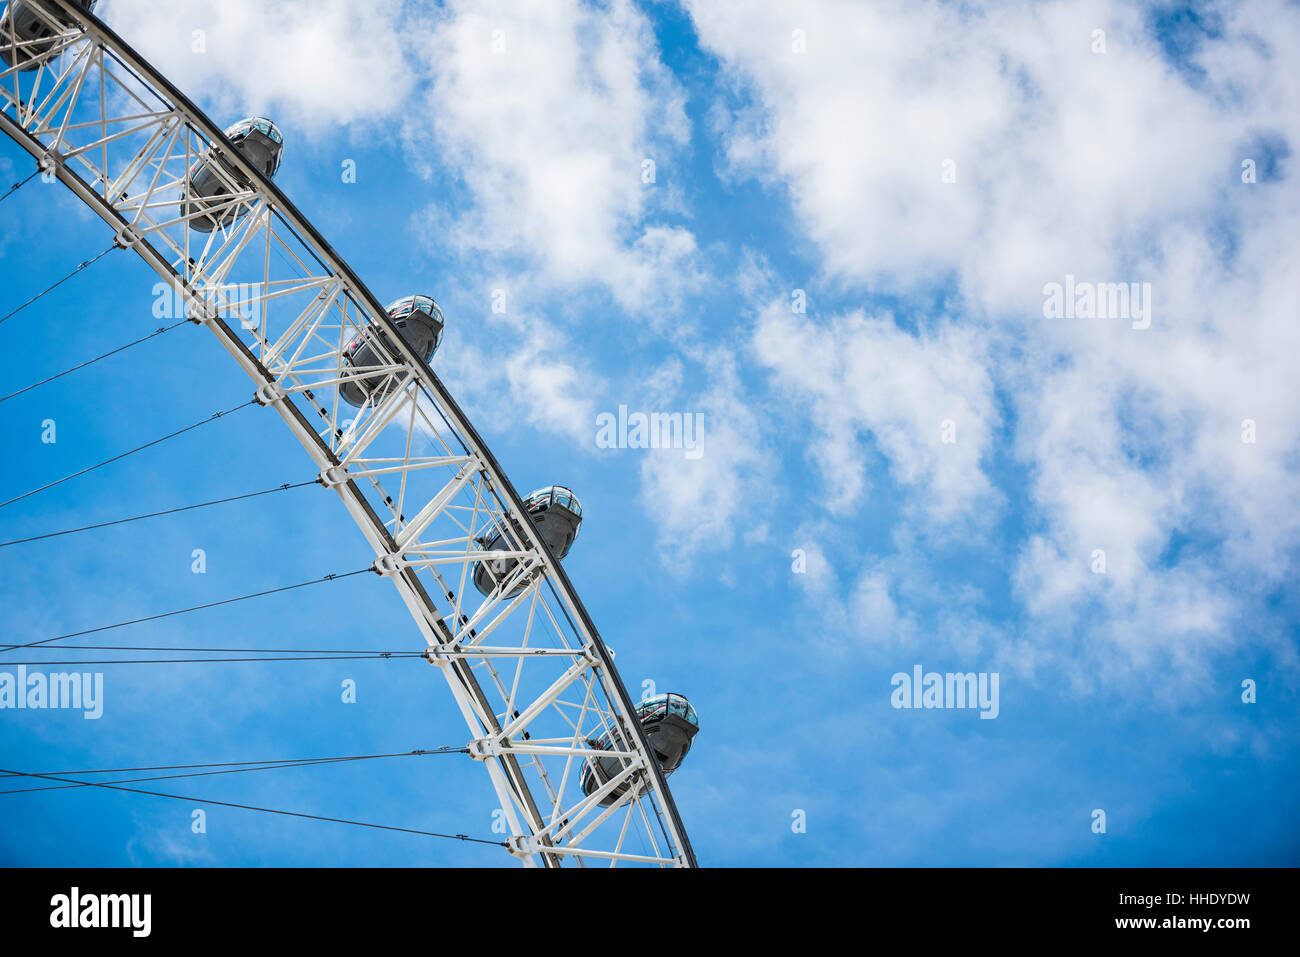 London Eye (Millennium Wheel), London Borough of Lambeth, London, UK Stock Photo